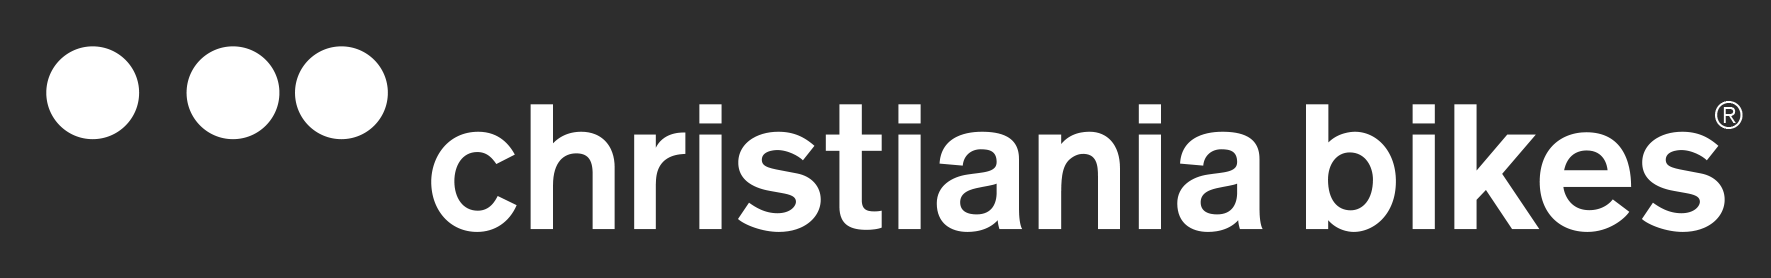 christiania-logo.png